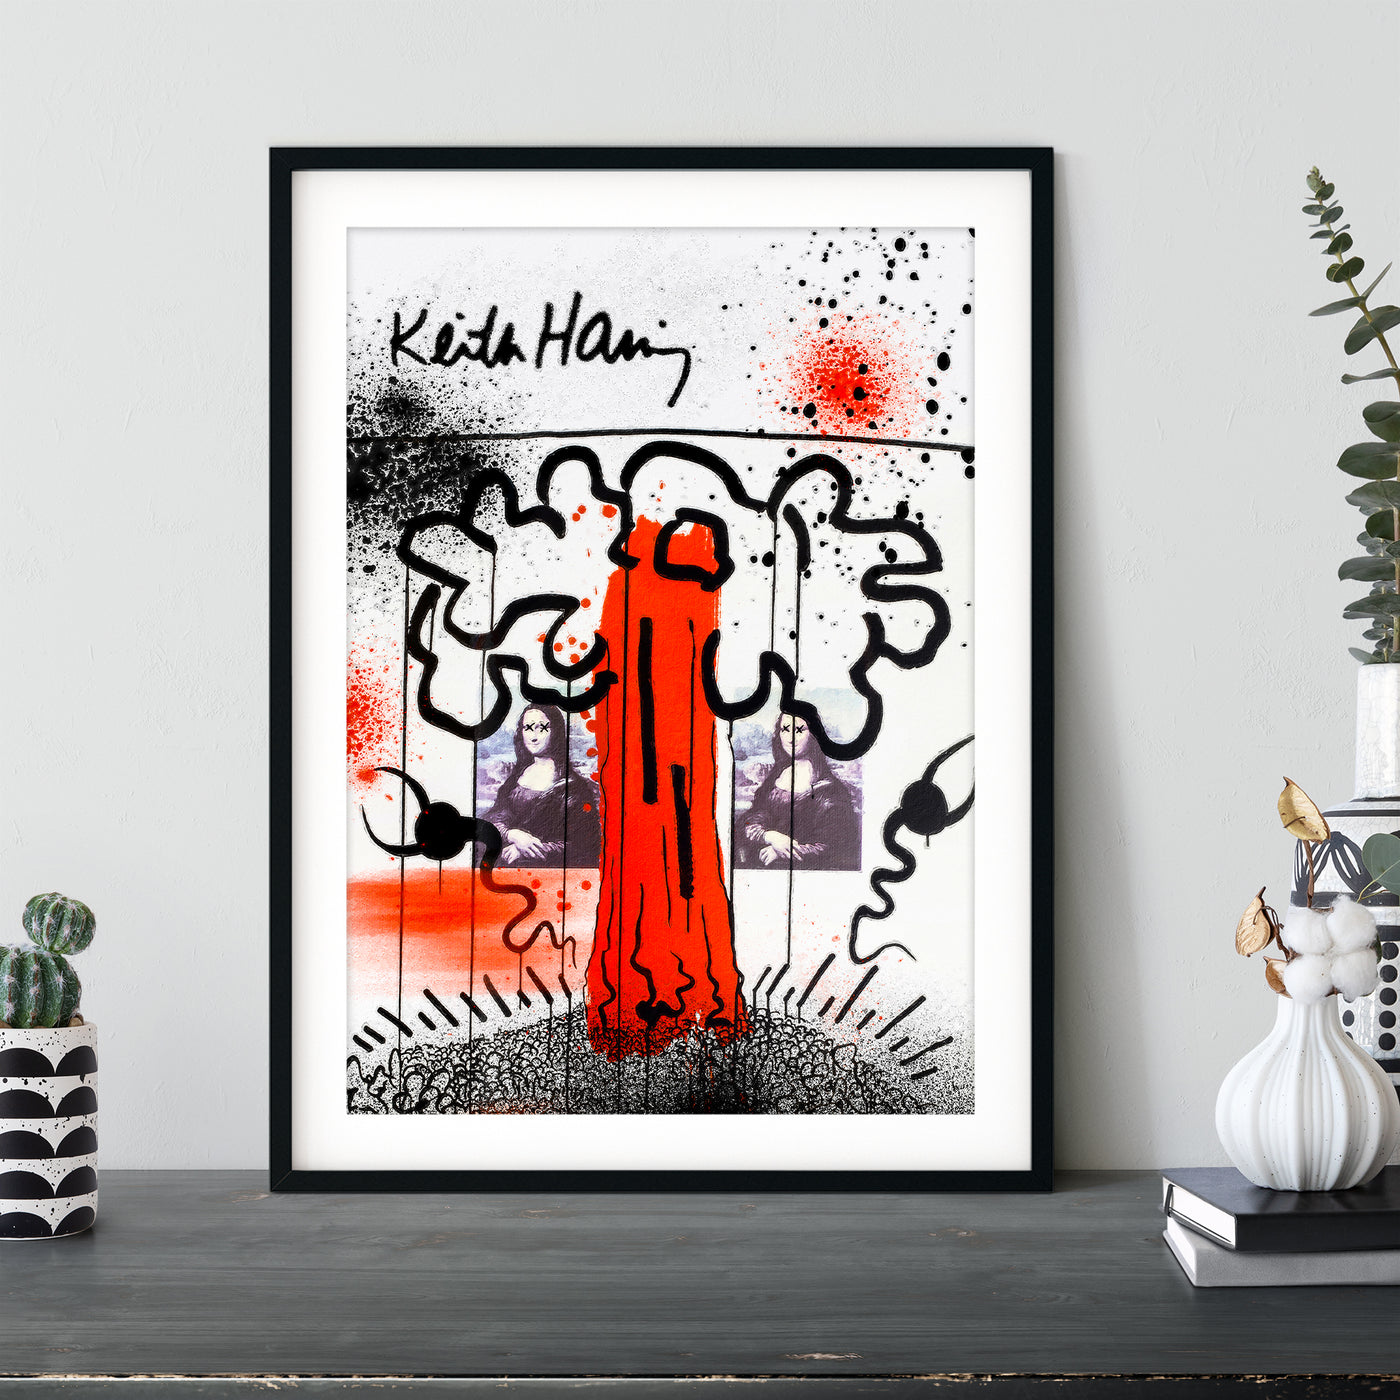 Keith Haring Pop Art #7